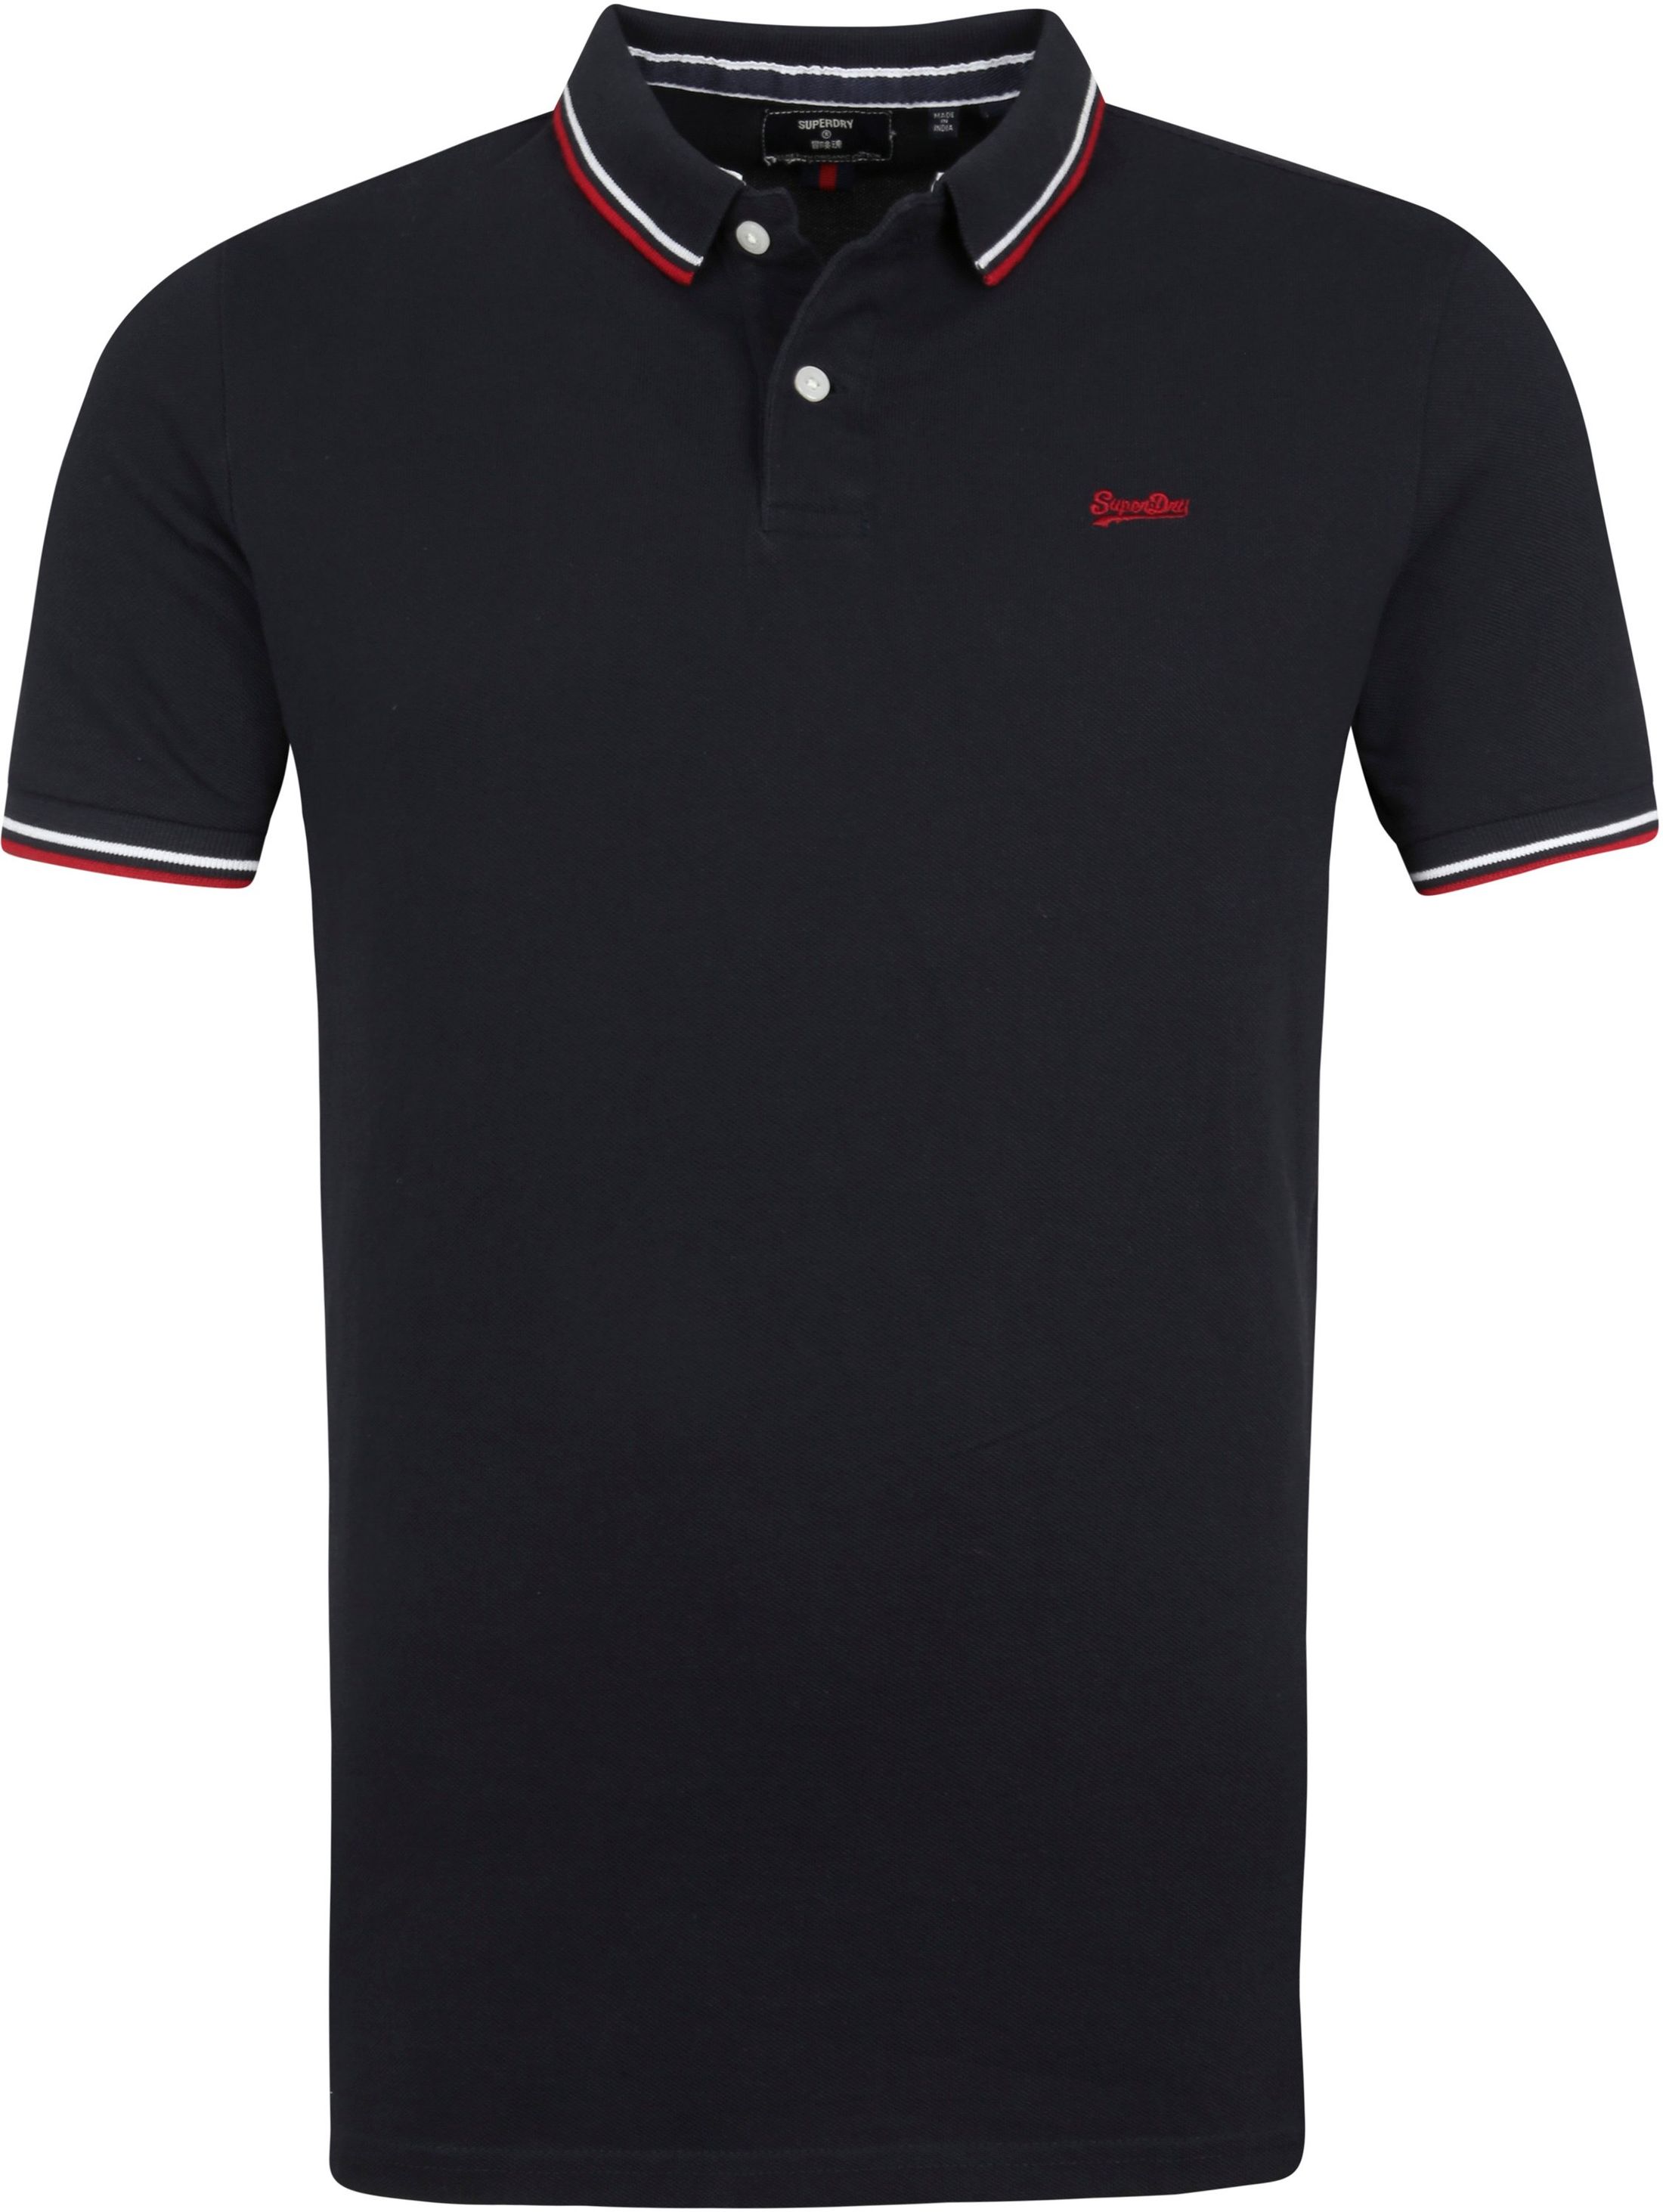 Superdry Classic Polo Shirt Pique Logo Navy Black size L